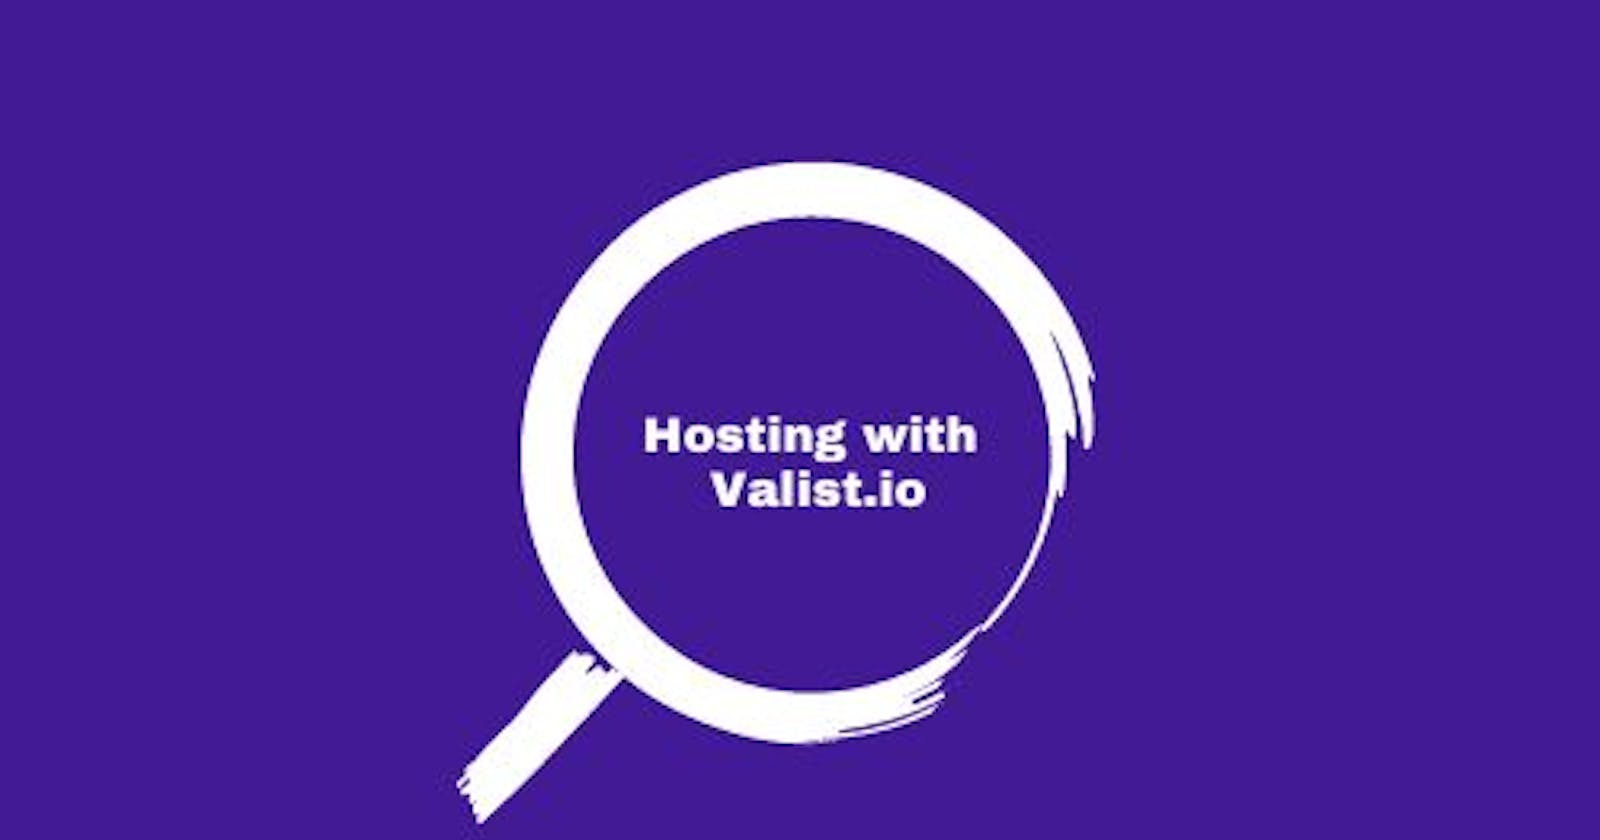 Hosting with Valist.io